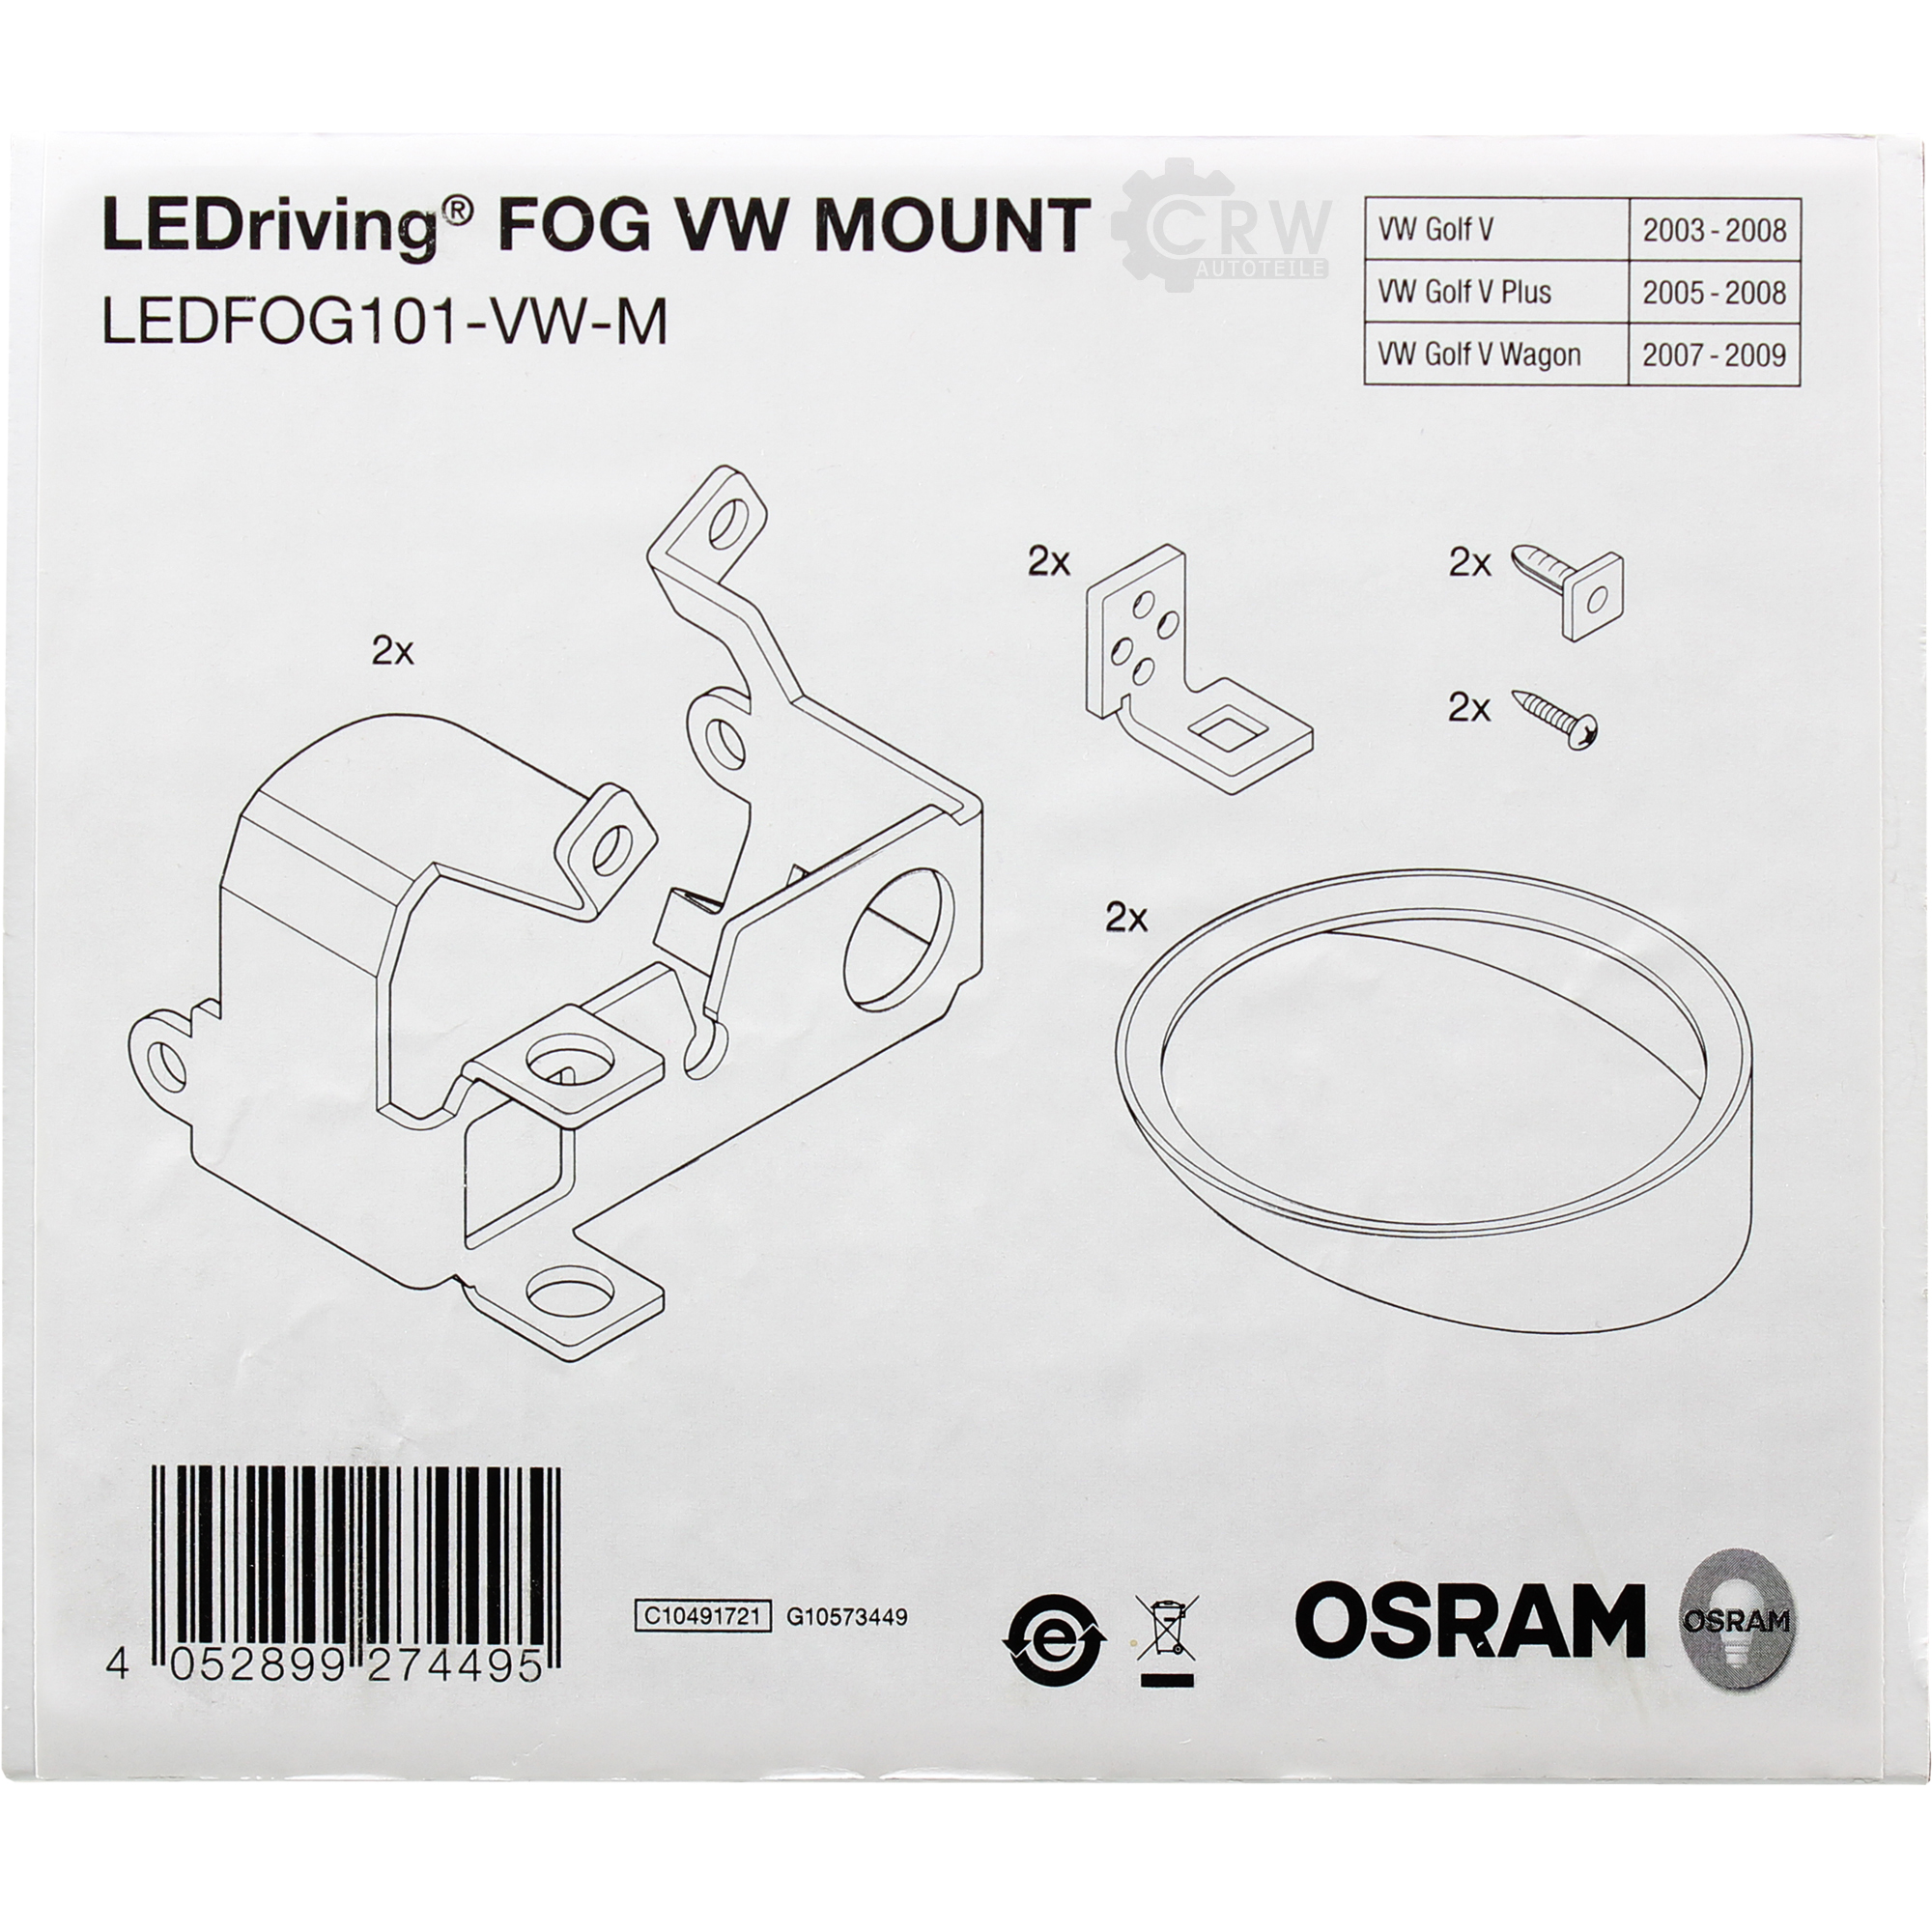 OSRAM Set LEDriving FOG VW MOUNT Halterung für VW Golf V, V Plus, V Kombi